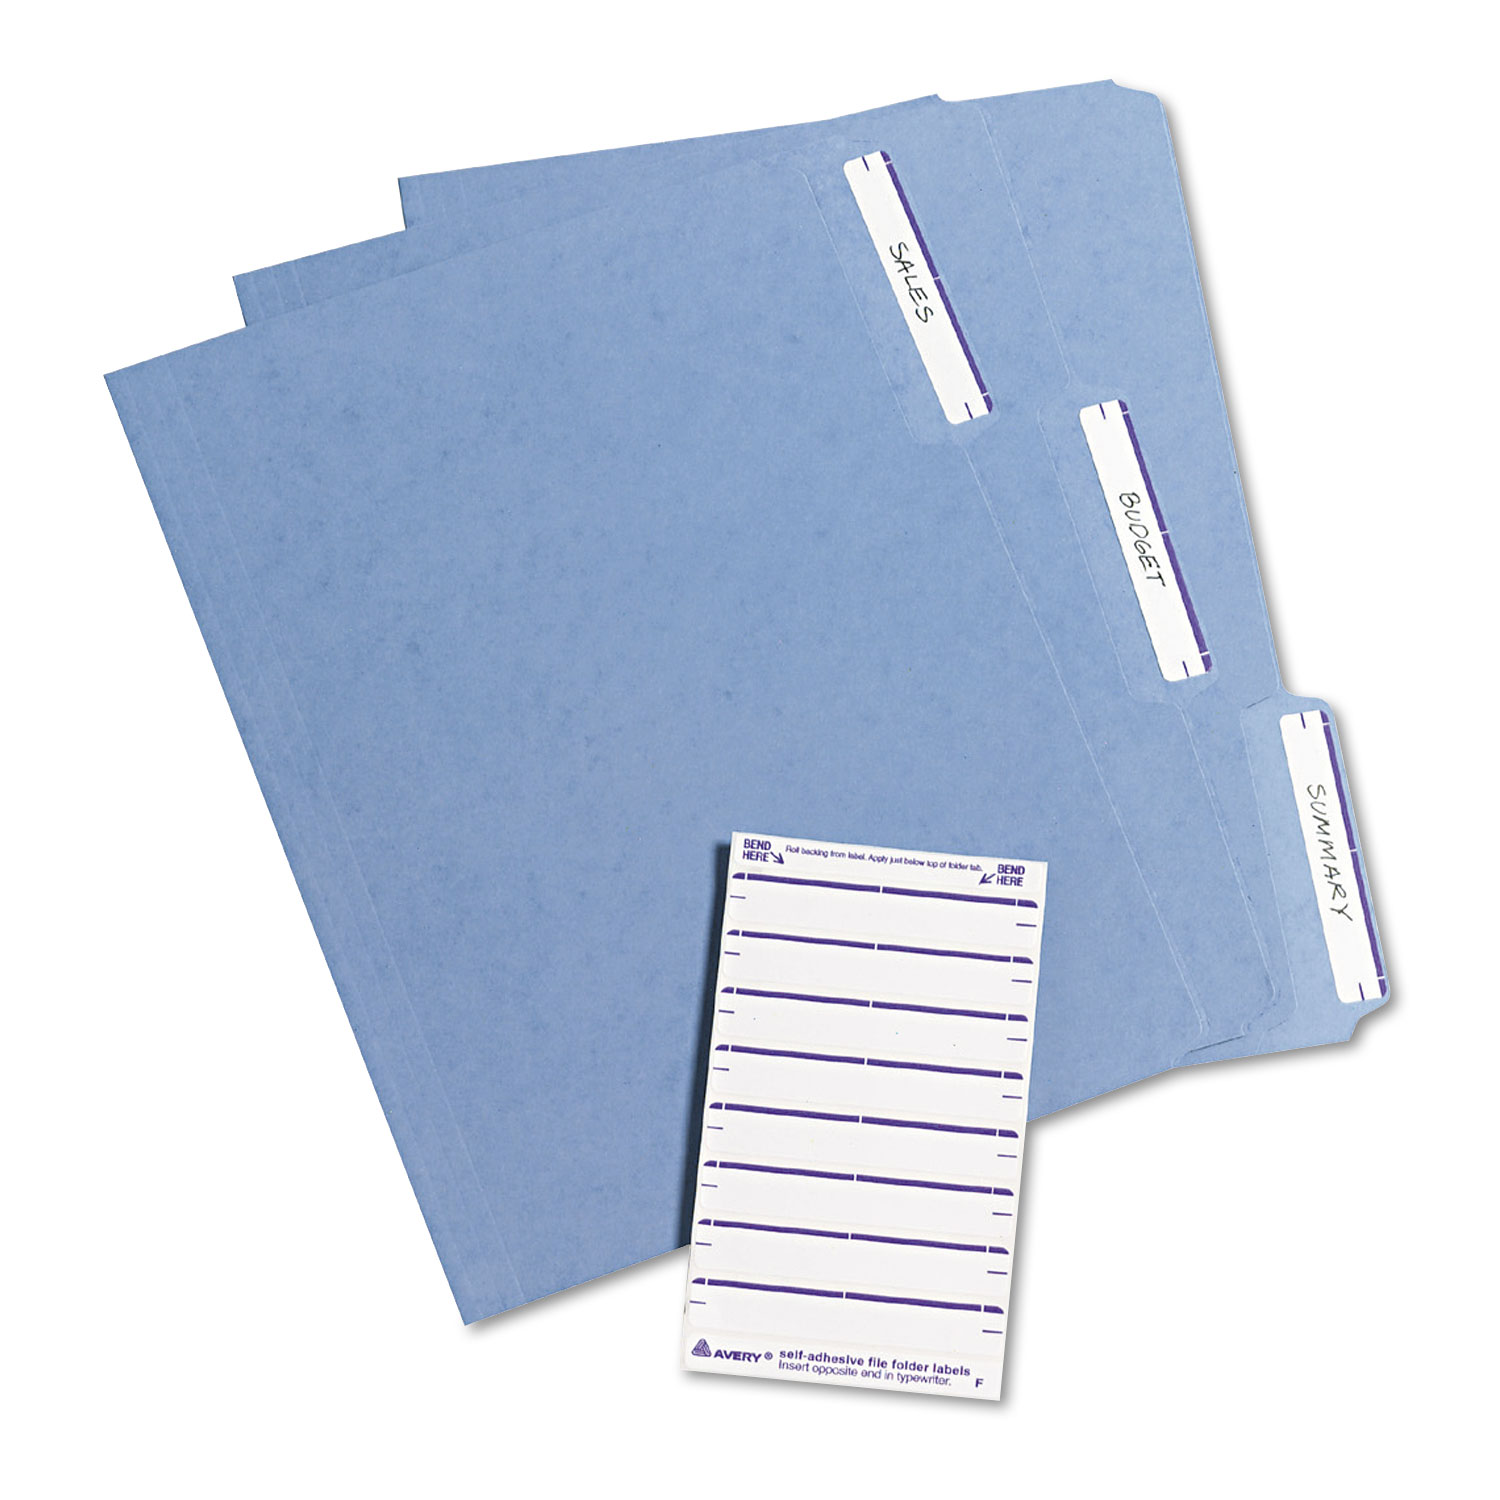 Print or Write File Folder Labels, 11/16 x 3 7/16, White/Purple Bar, 252/Pack